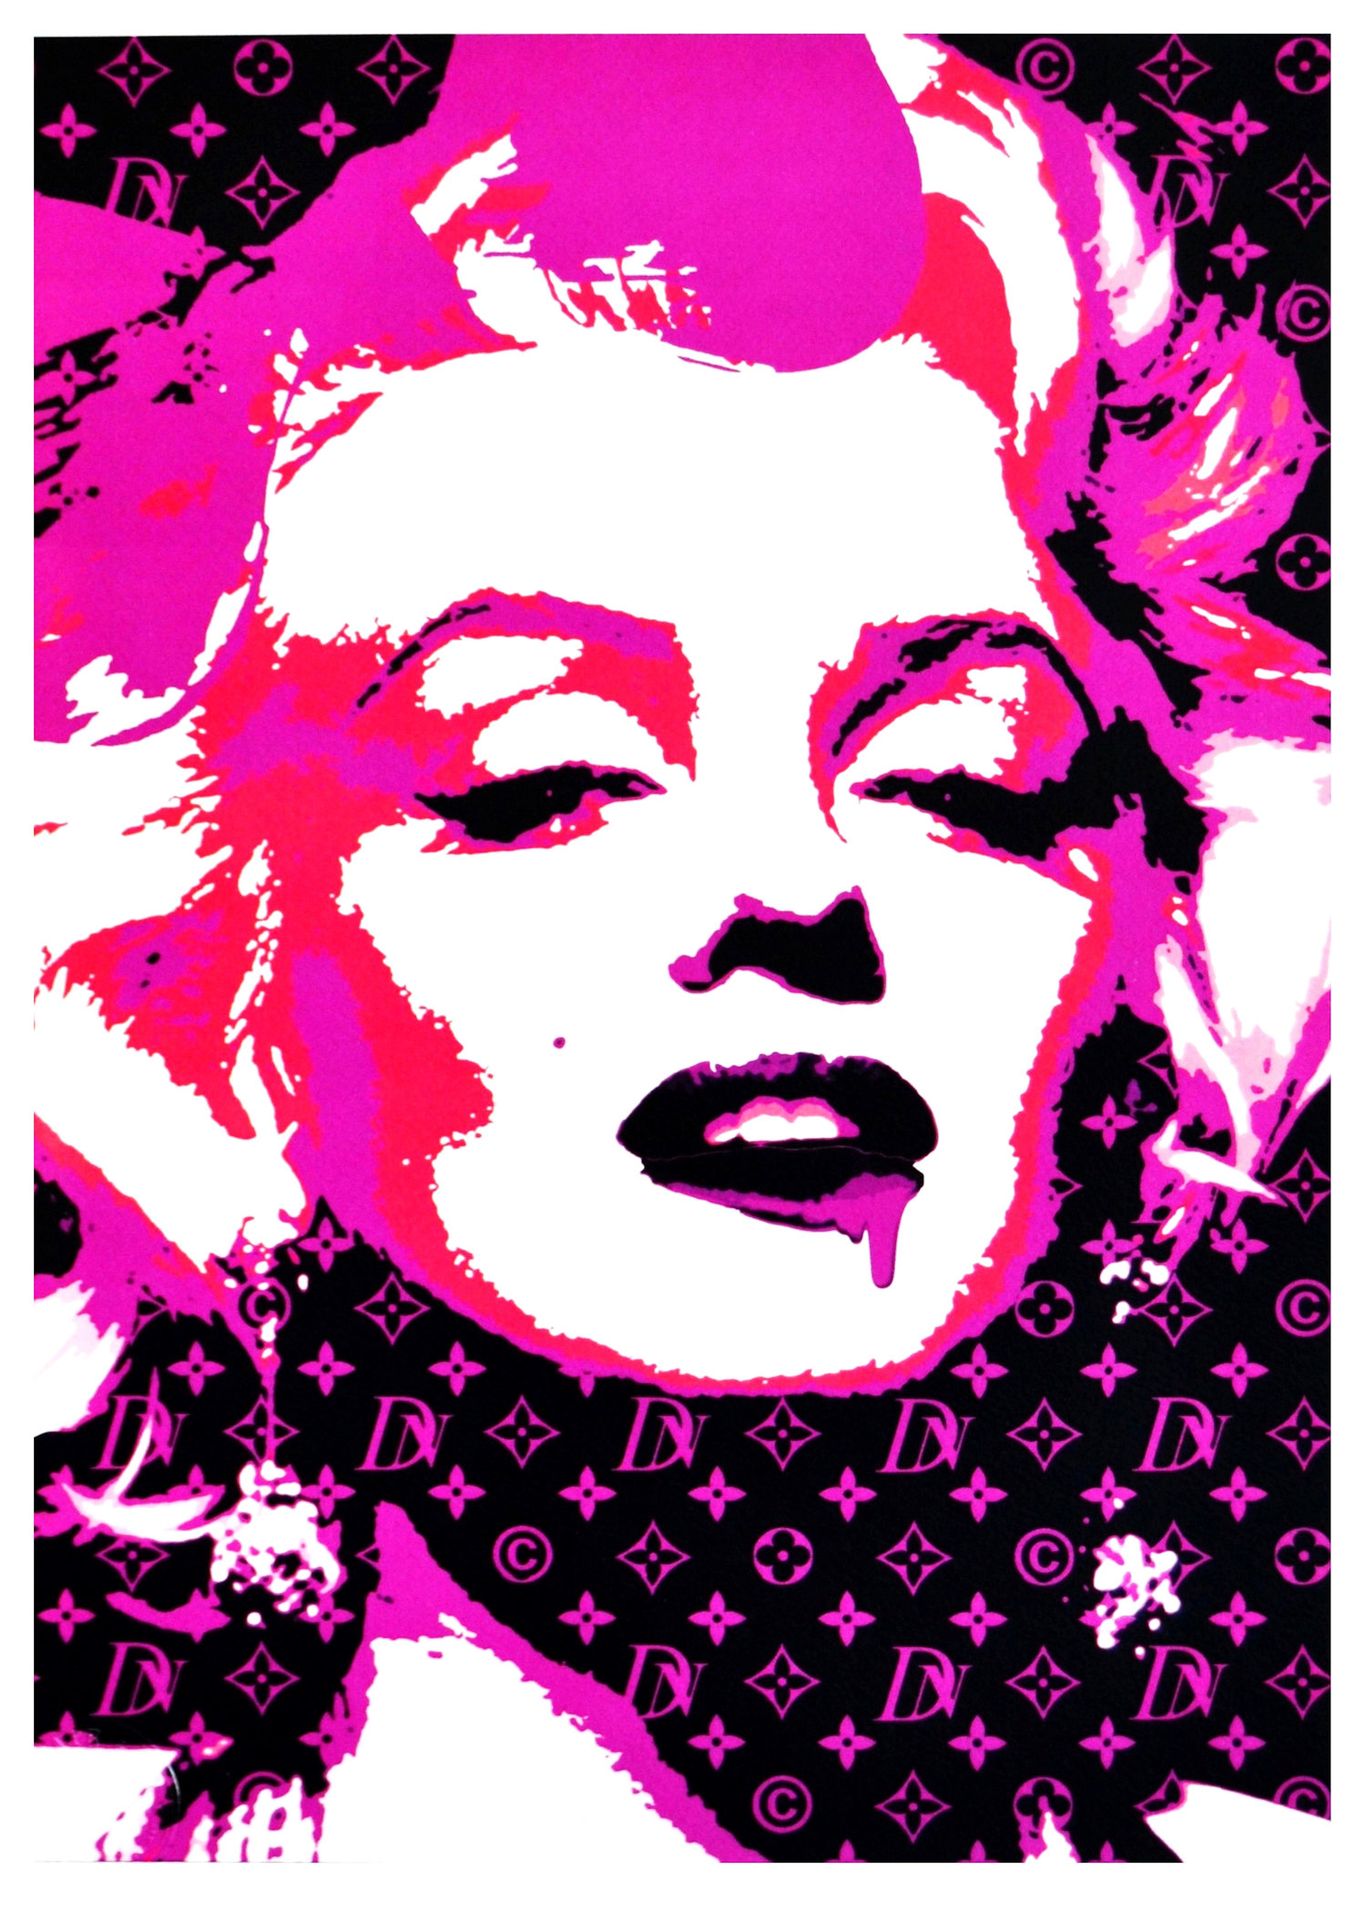 Death NYC Death NYC

Monroe Glow Pink 2015

Silkscreen print.

Limited edition o&hellip;